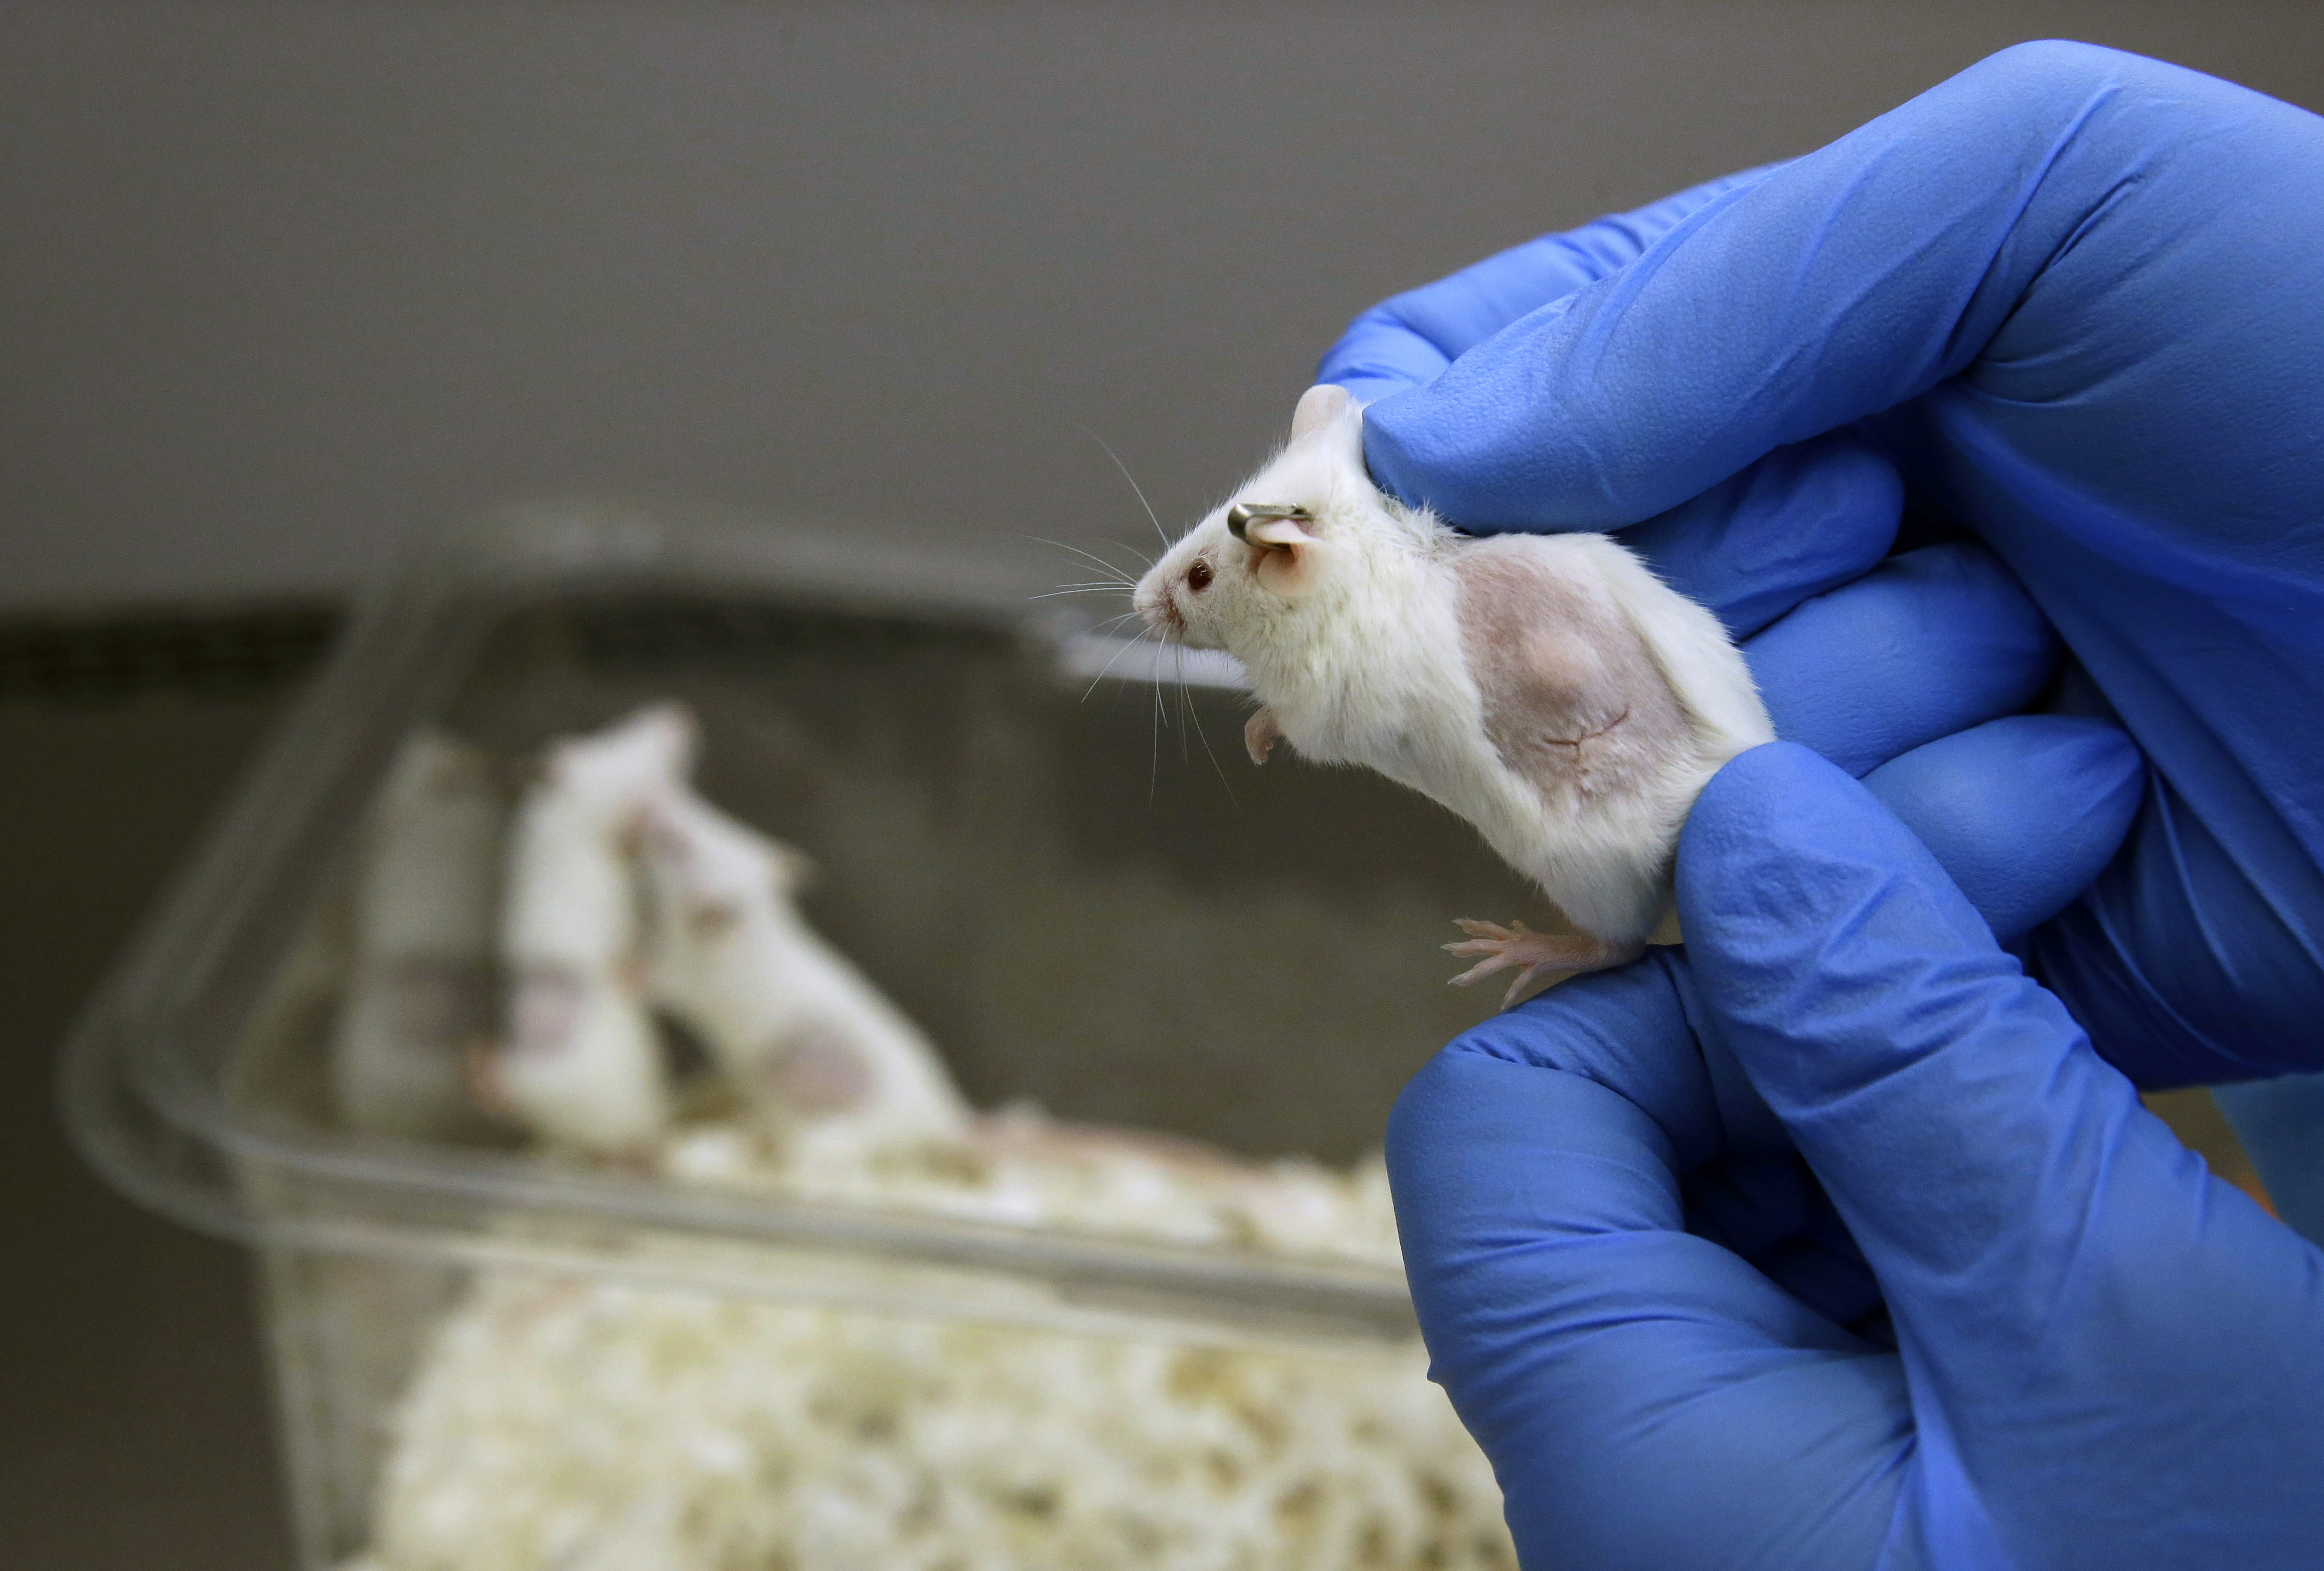 Animal experimentation up 73 percent, study says - CBS News